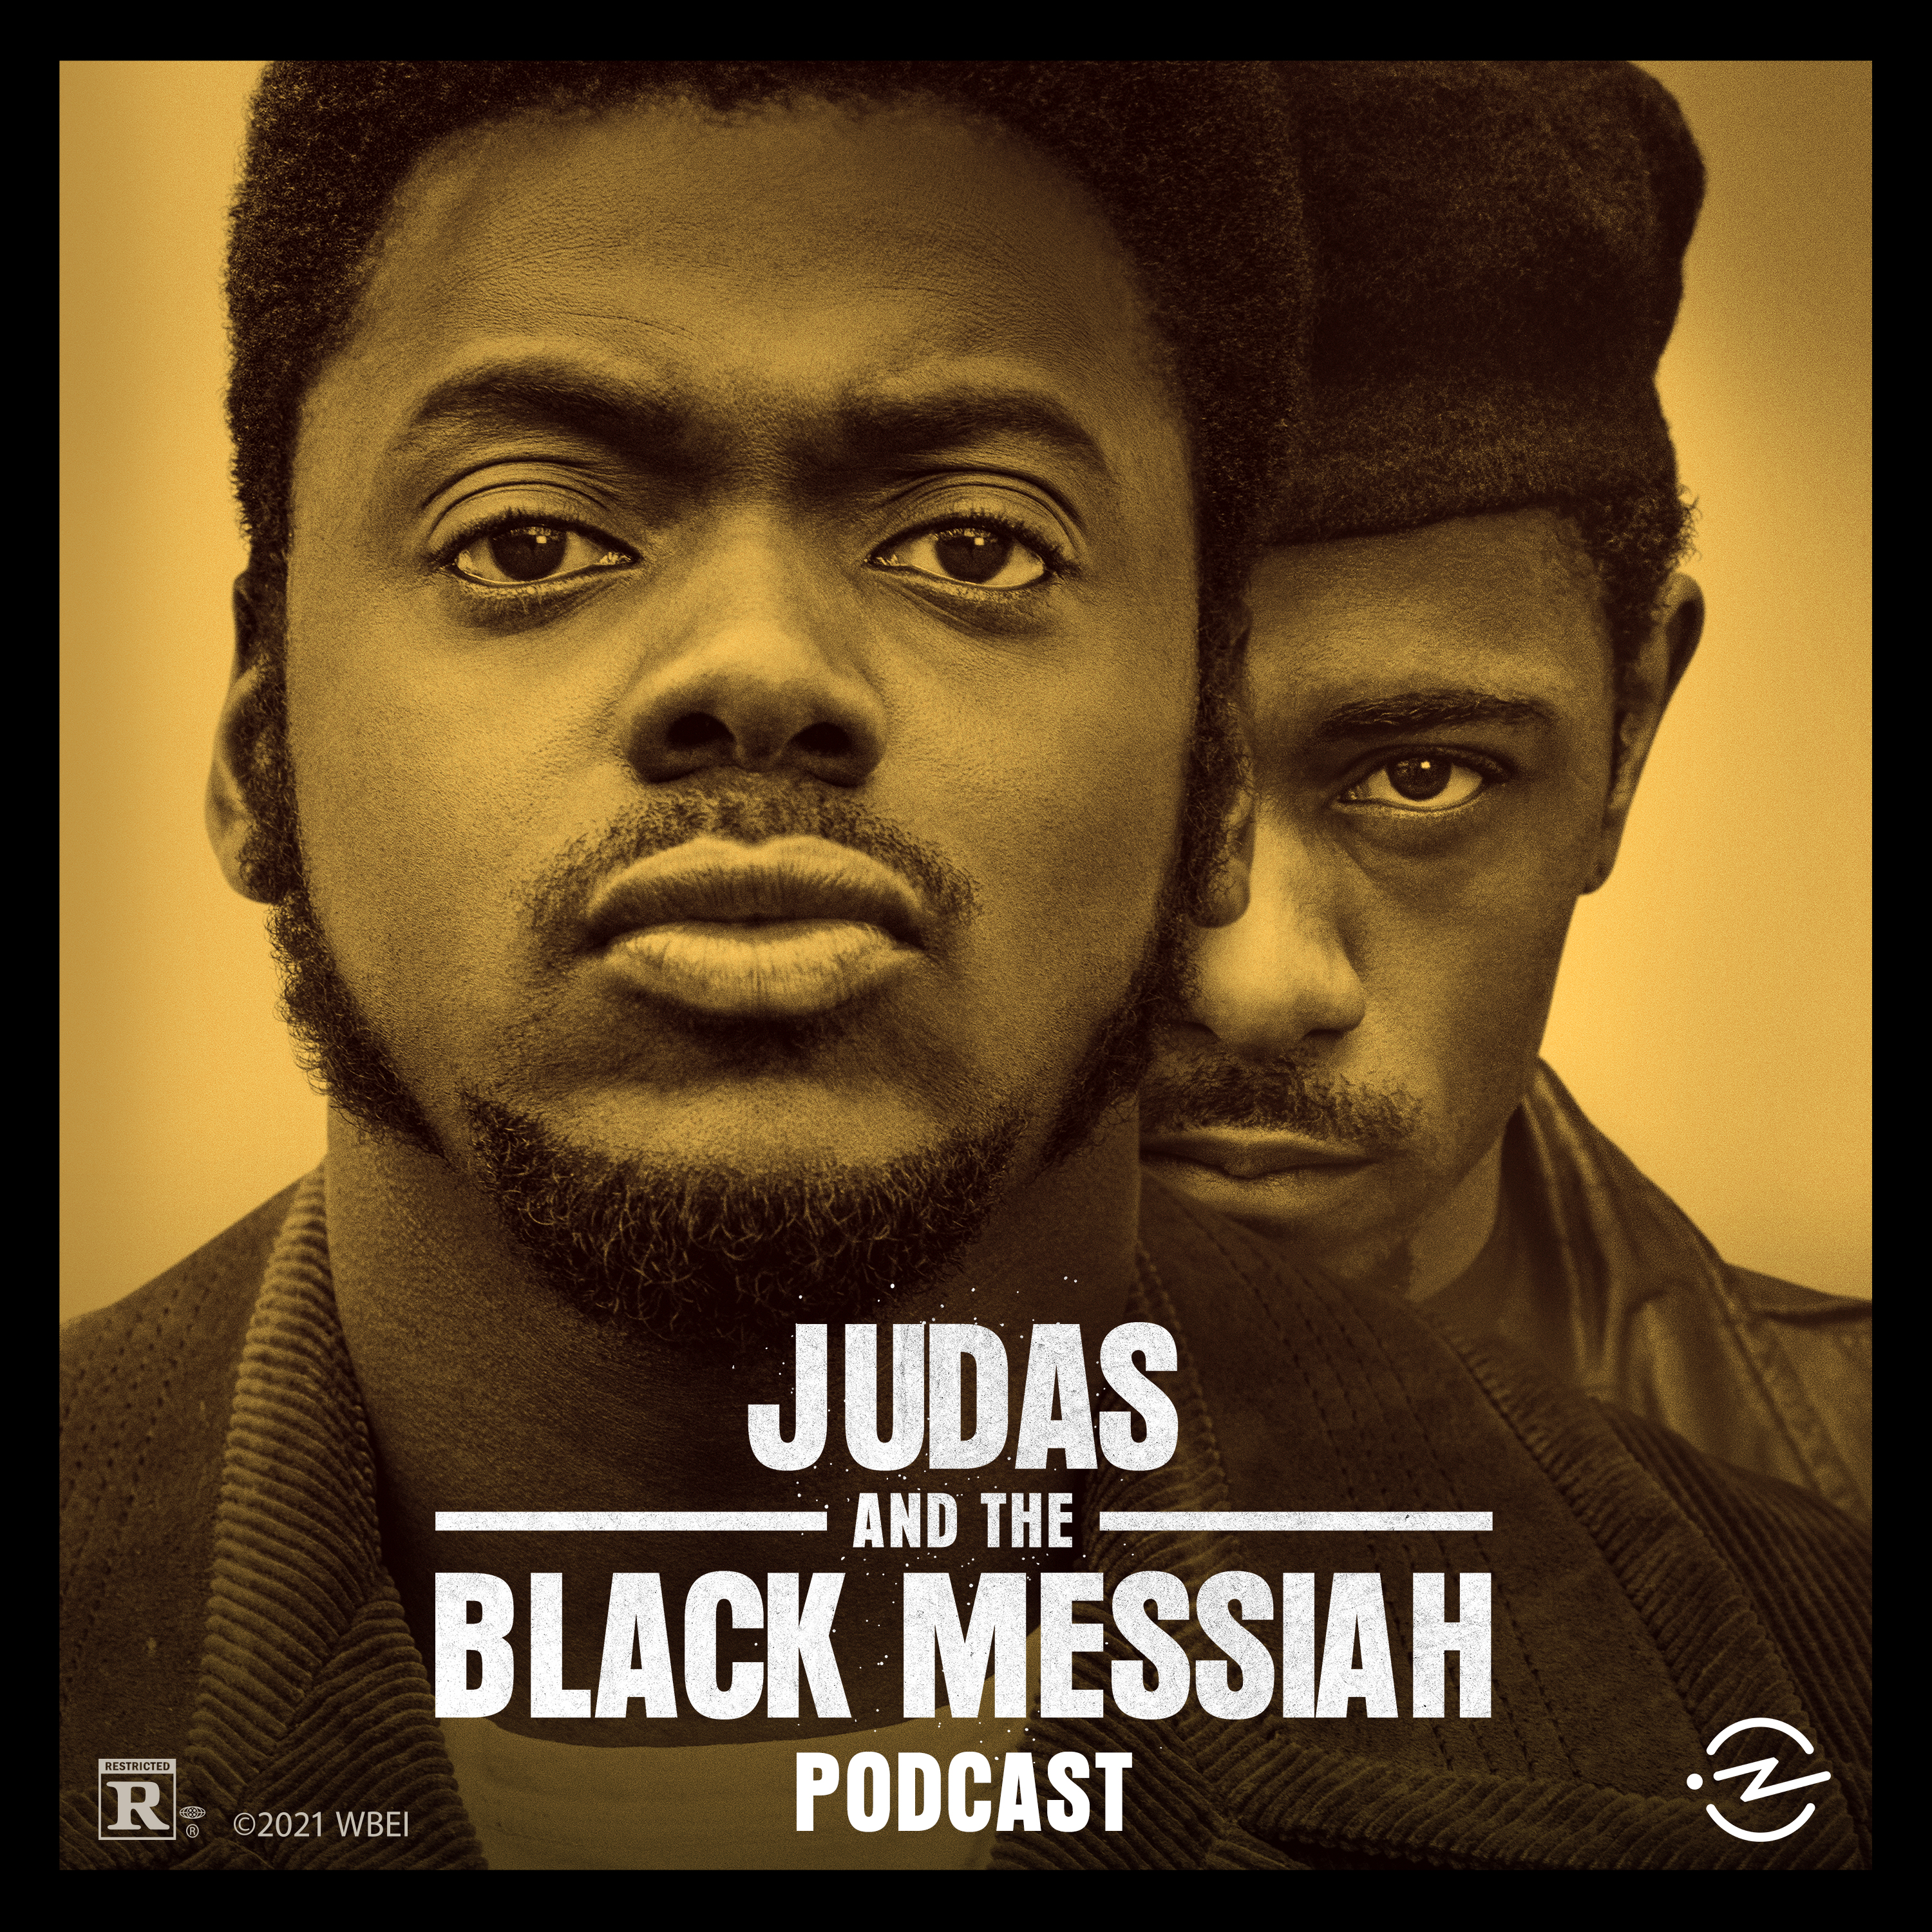 Judas and the Black Messiah Podcast Trailer